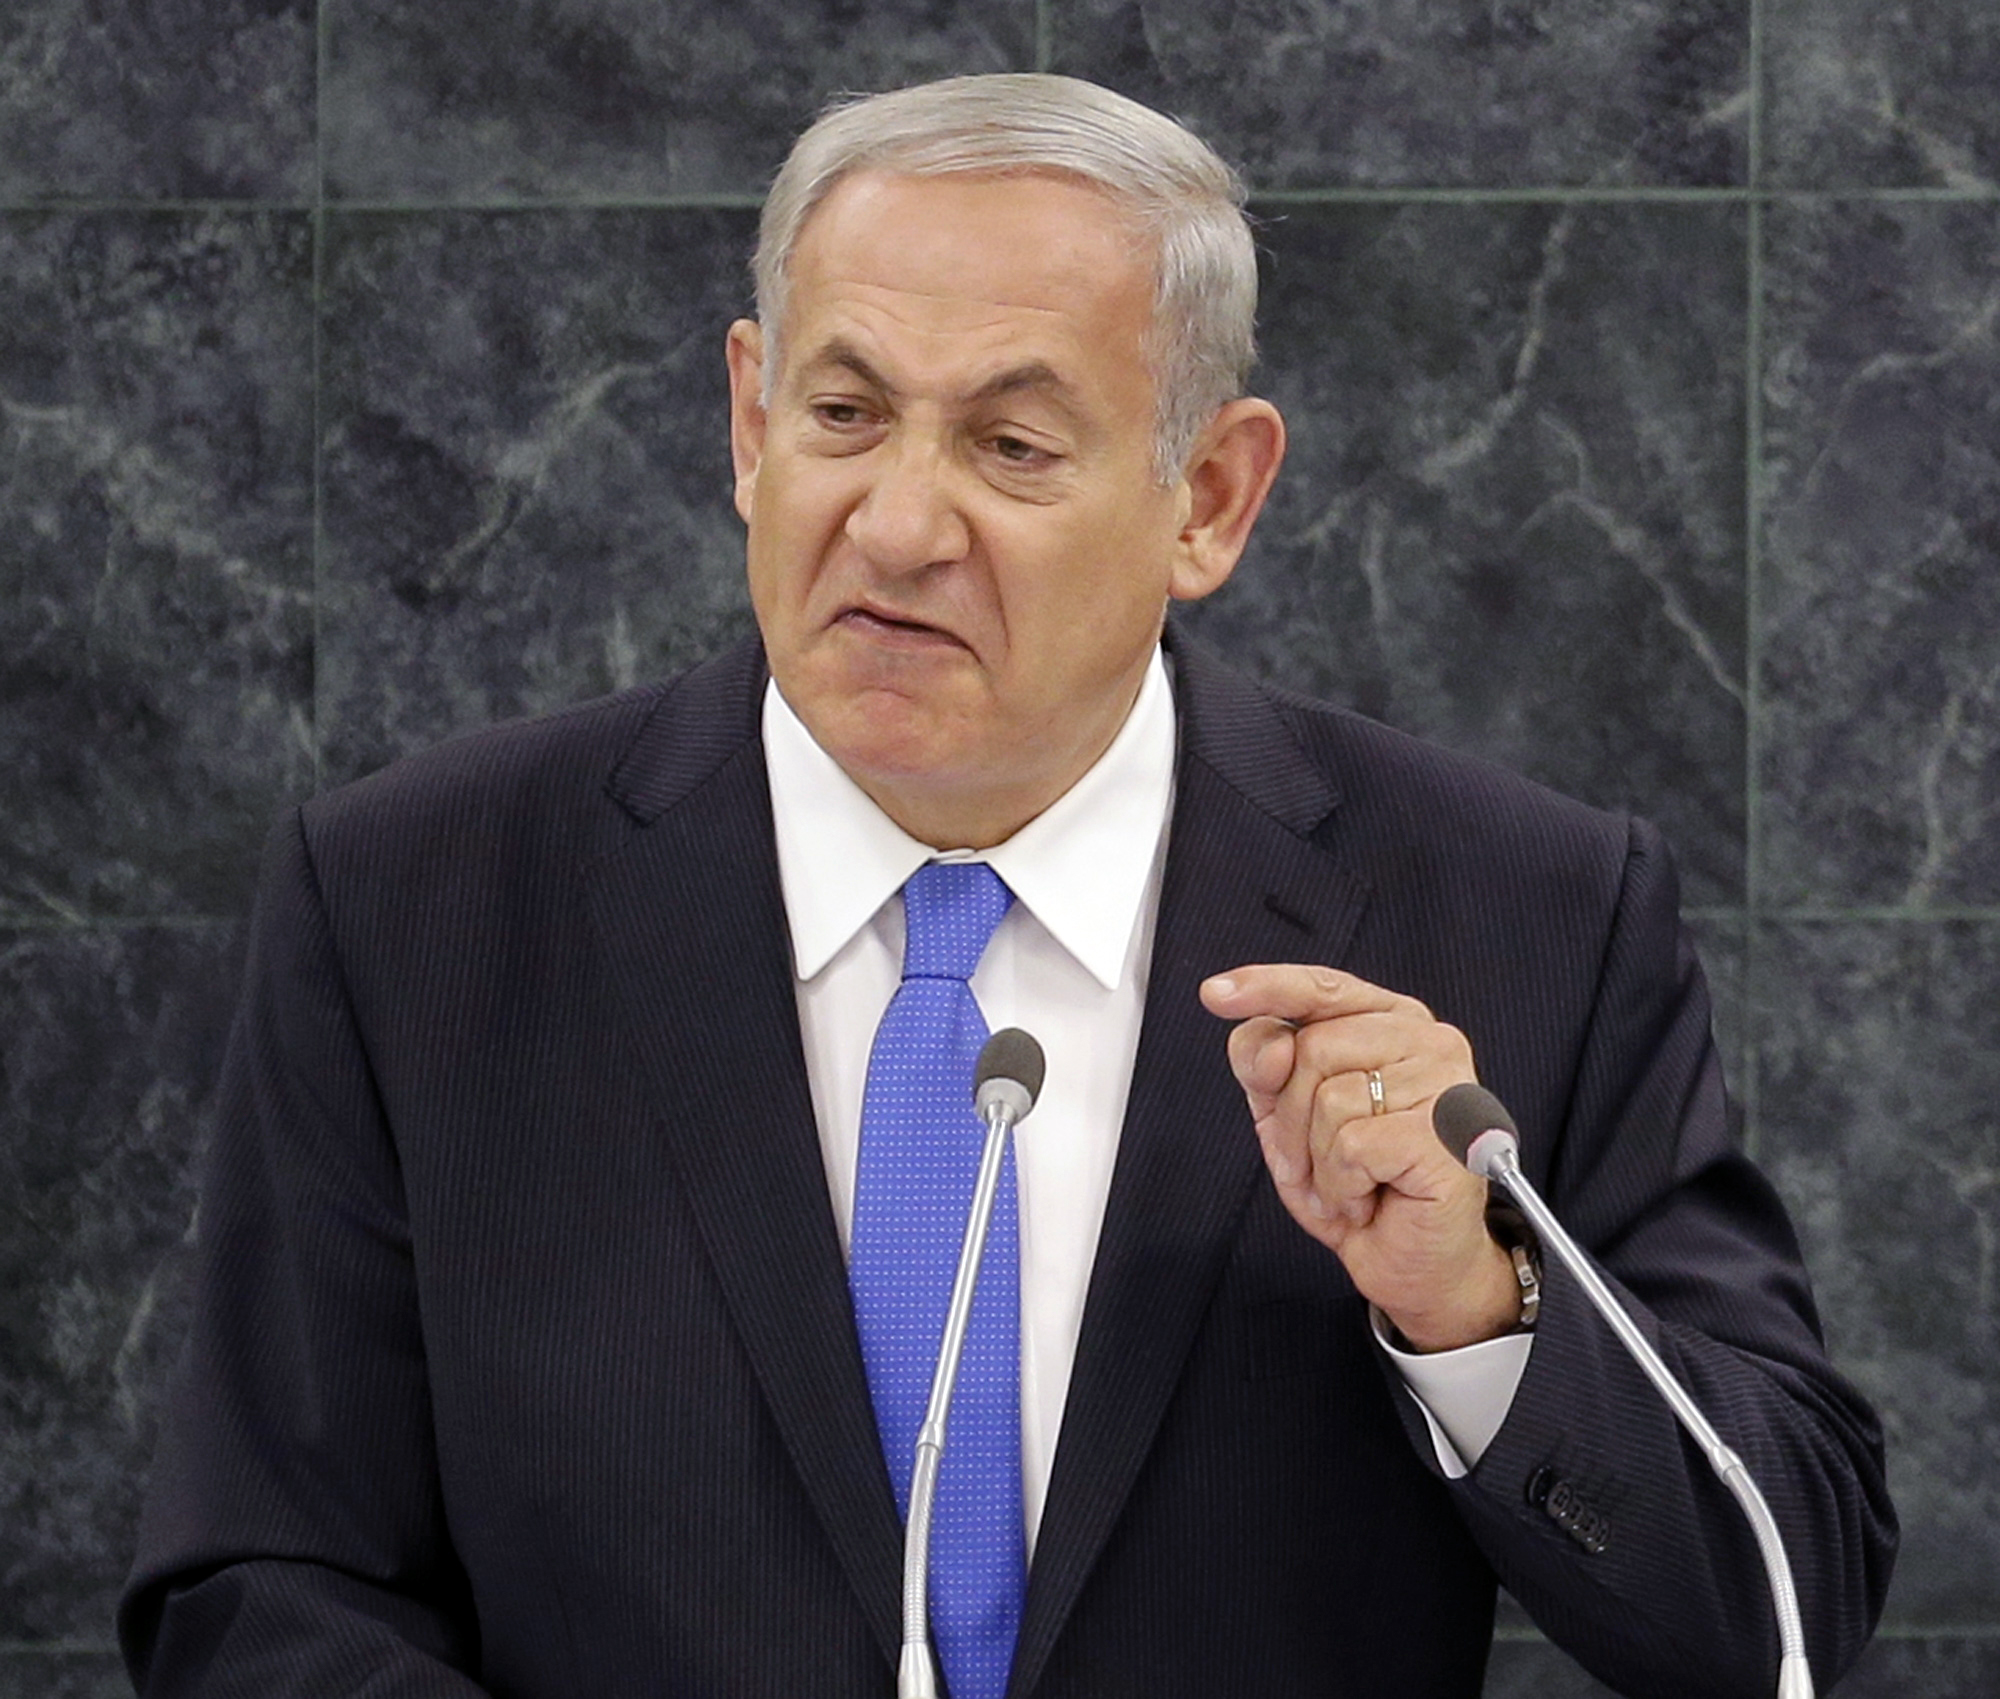 Israeli Prime Minister Benjamin Netanyahu: Don't believe Iran's "charm